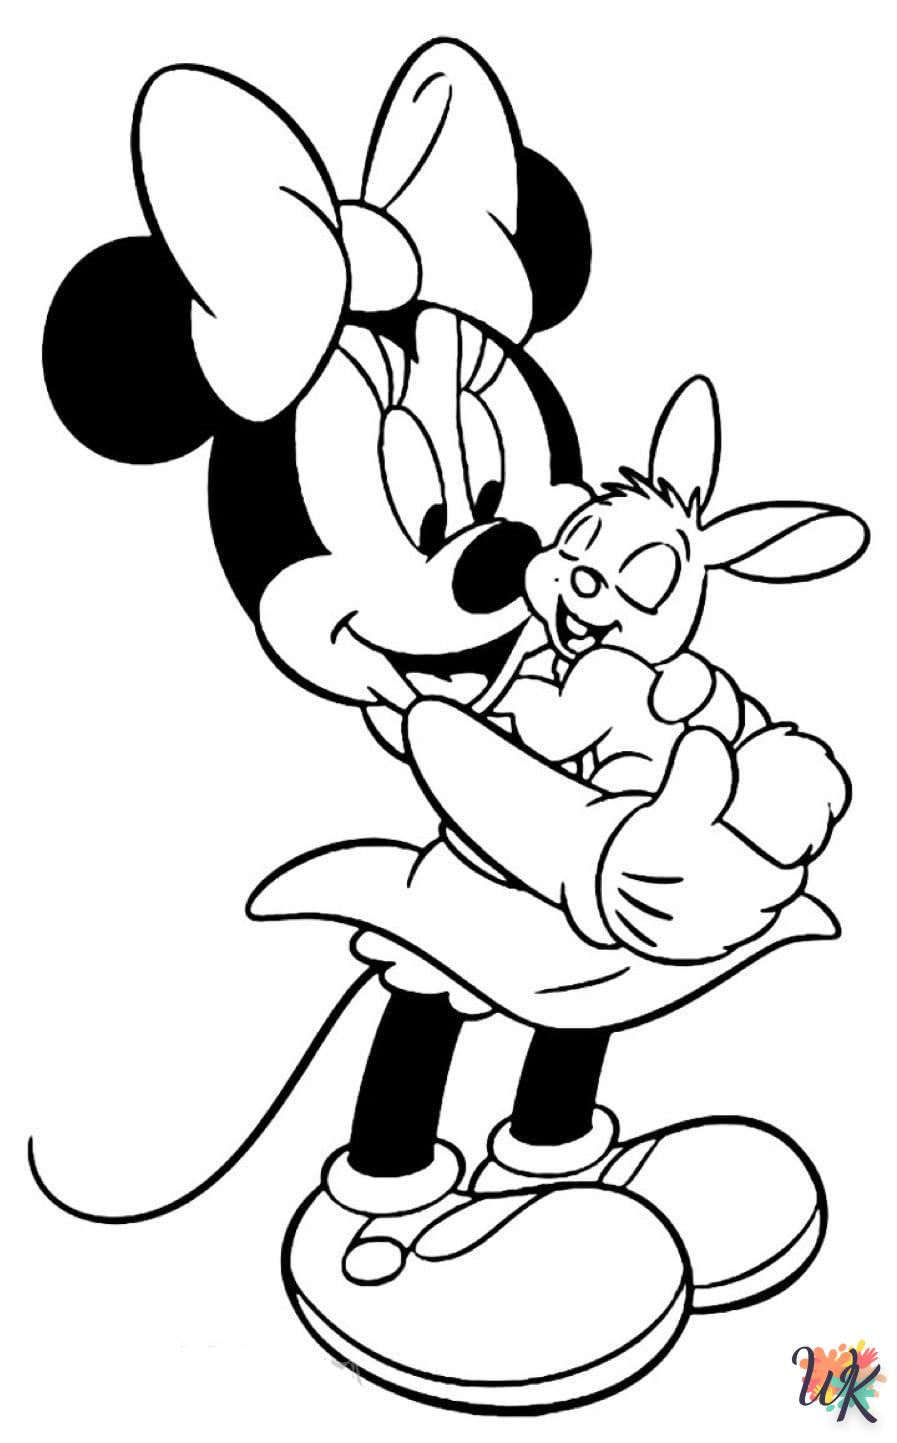 Minnie Mouse kleurplaten21